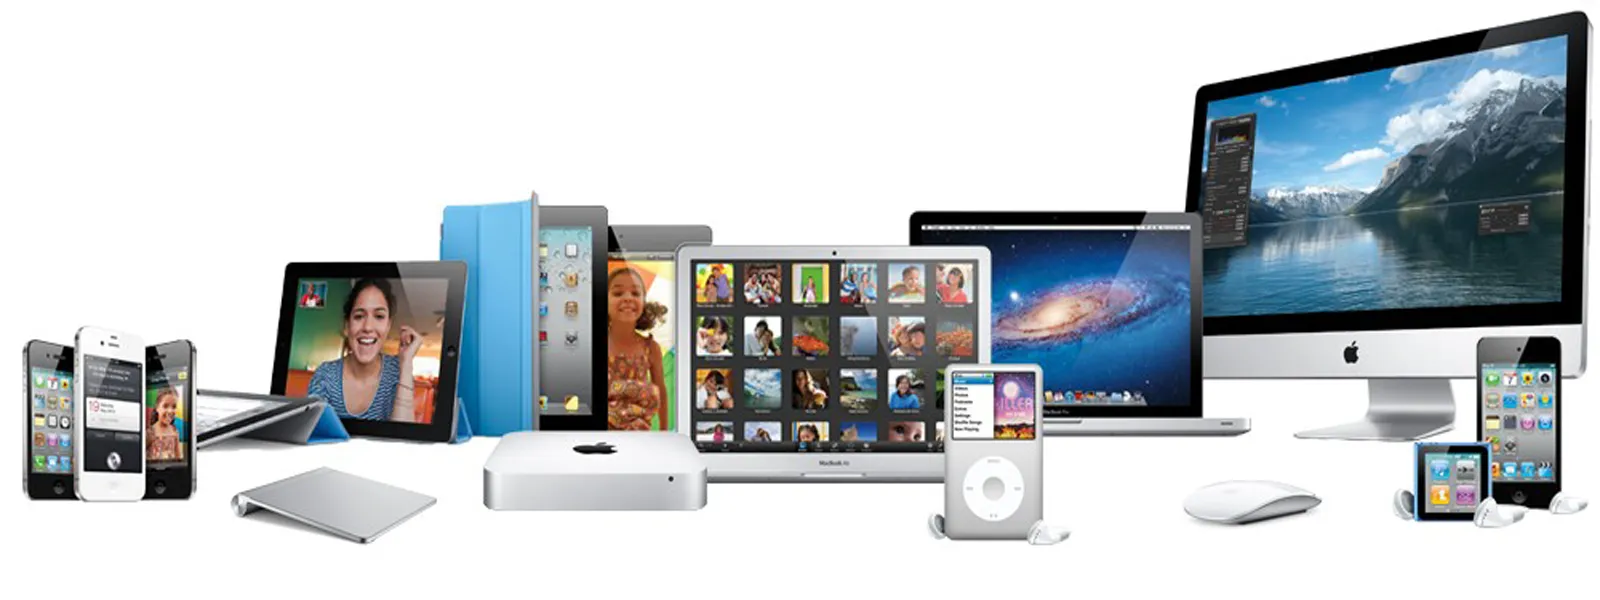 Apple Store Jaipur For iPhone, iPod, iMac, Macbook Pro, Macbook Air, Apple TV